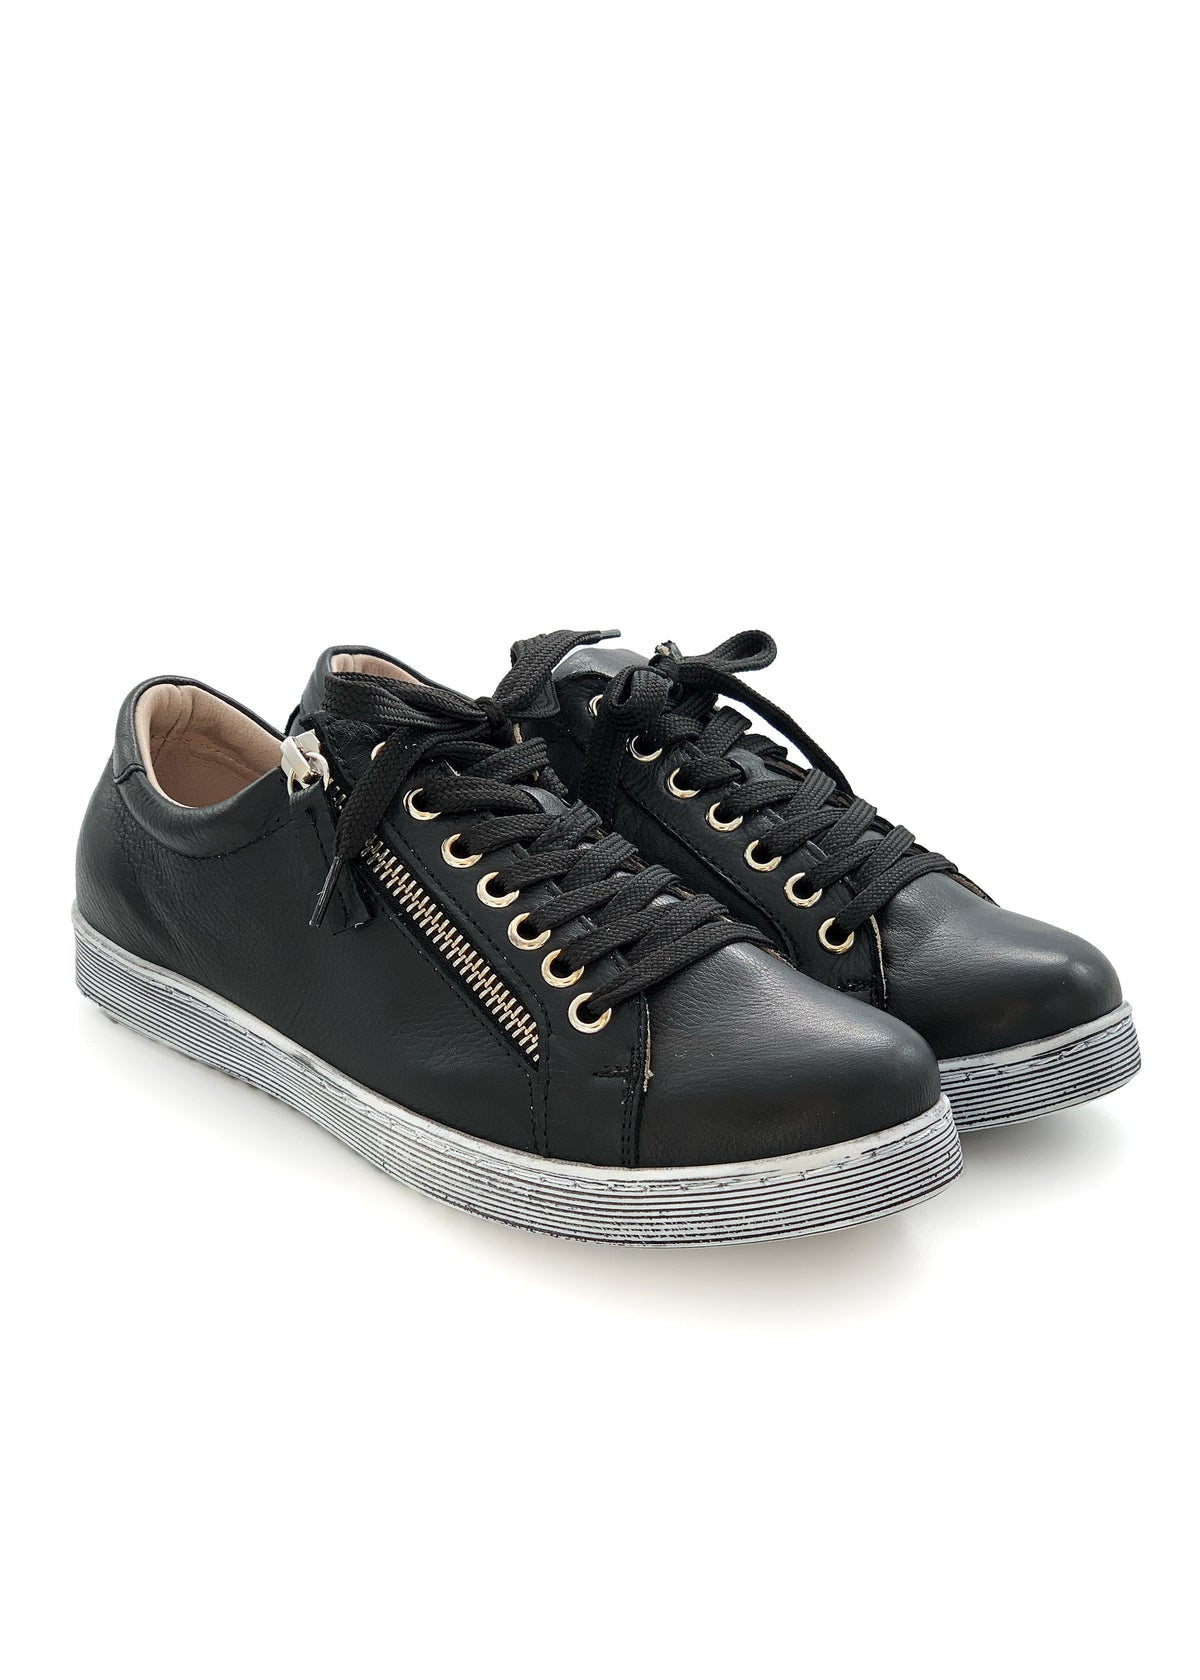 Low-top sneakers - black leather, zipper, wide last